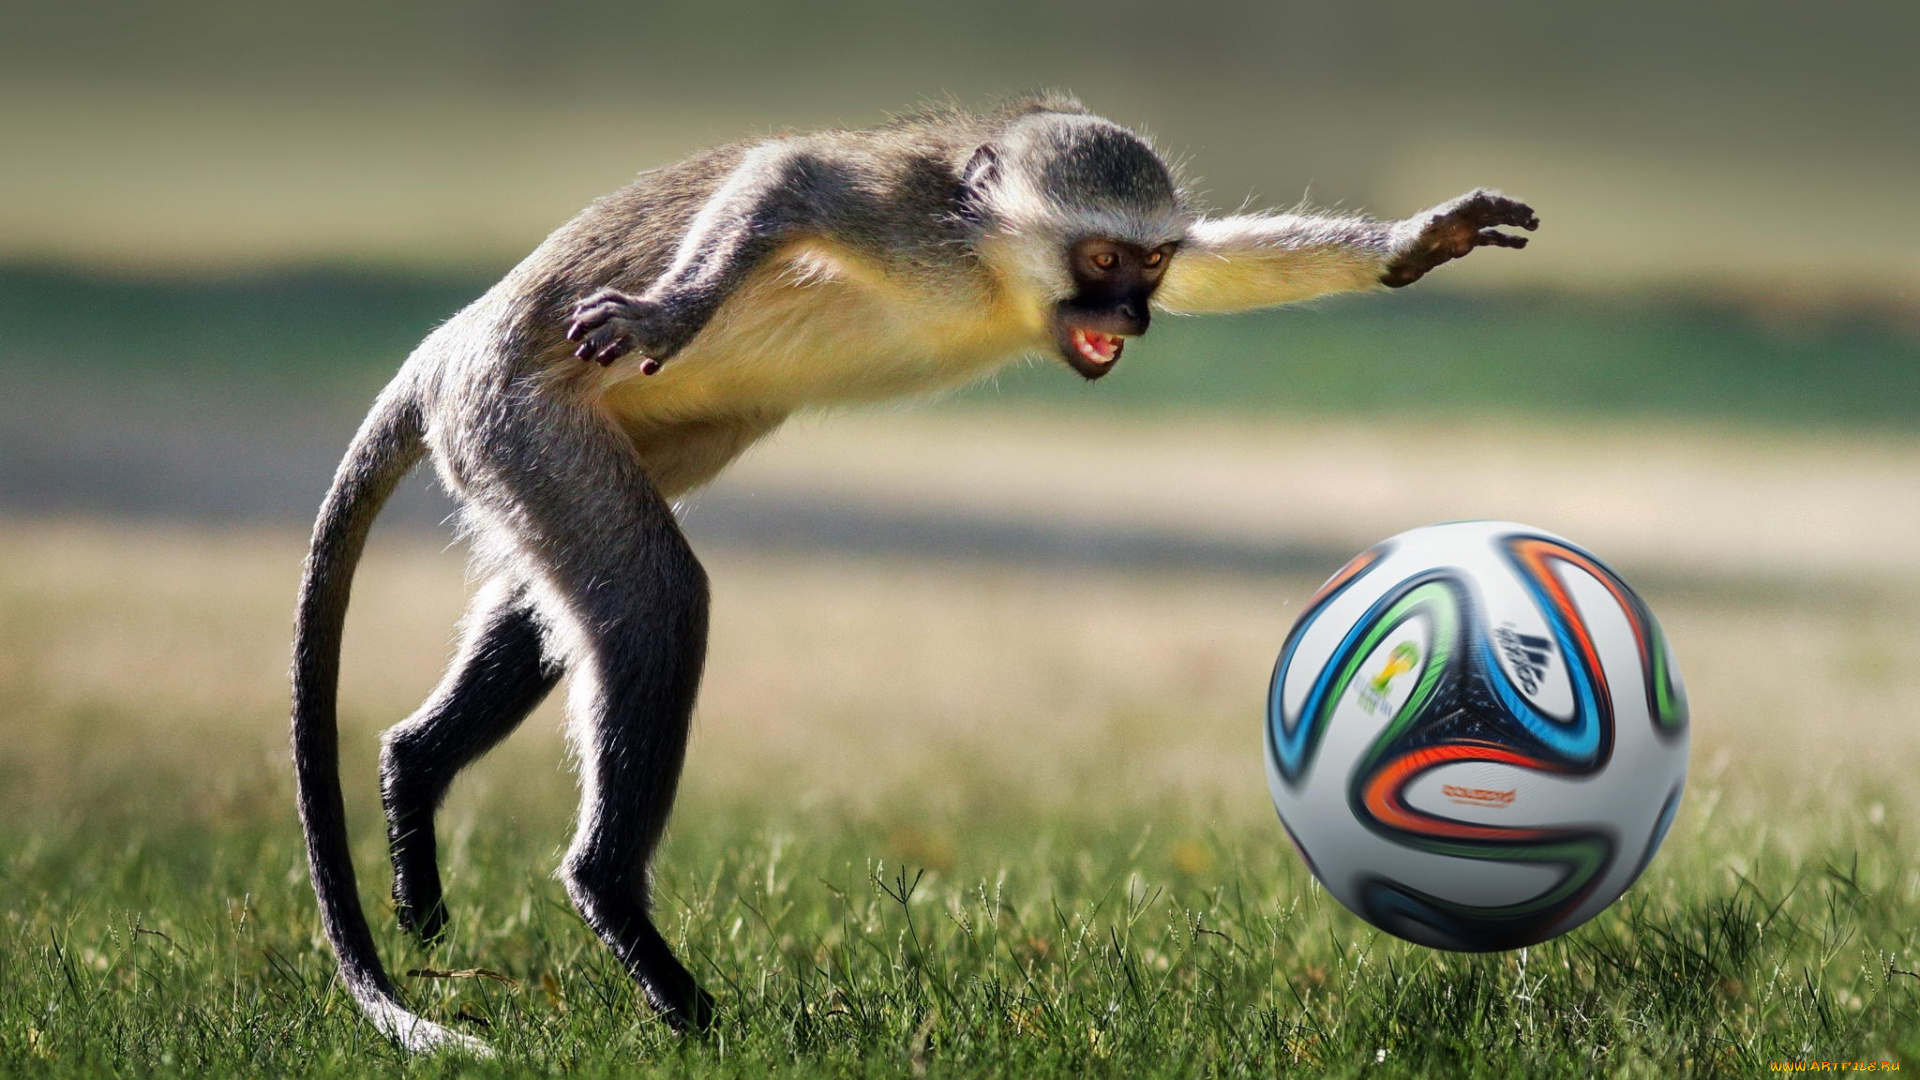 животные, обезьяны, футбол, football, ball, game, monkey, игра, животное, playing, мяч, обезьяна